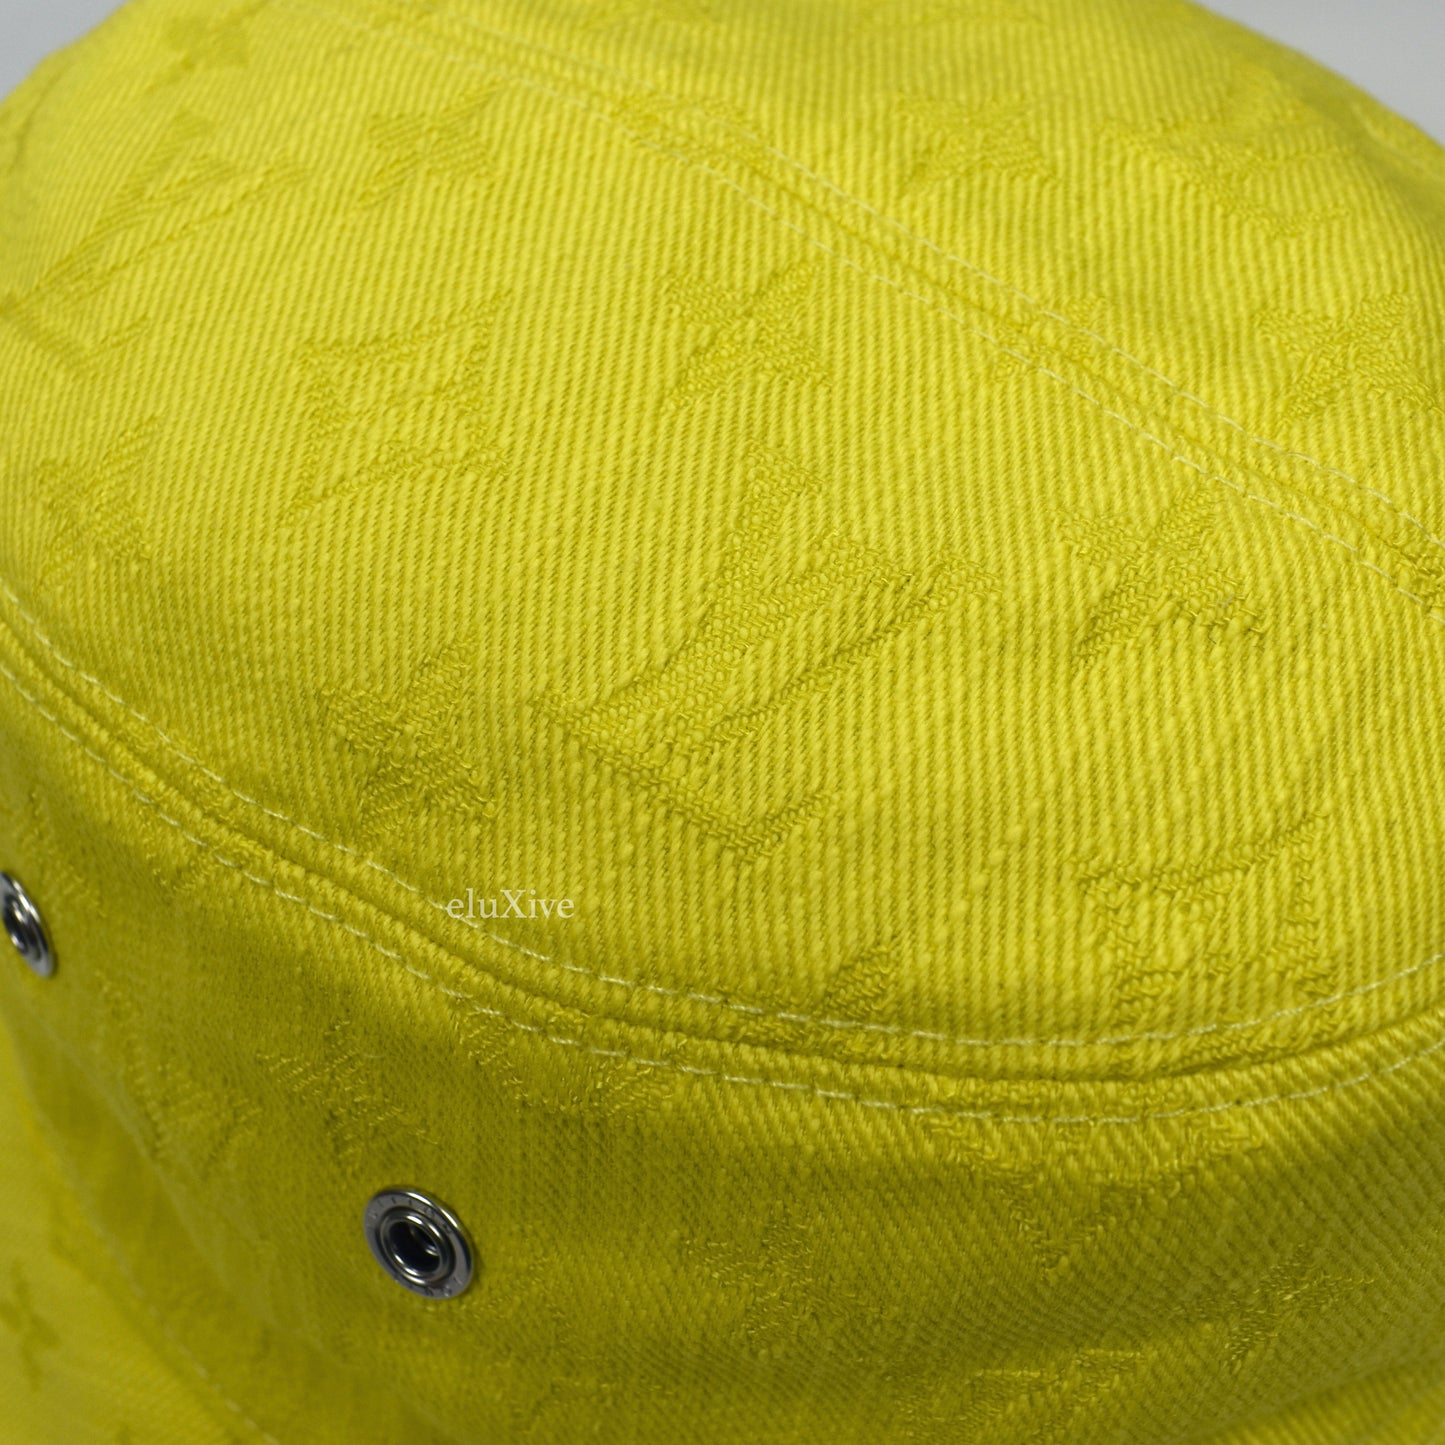 Louis Vuitton - LV Everyday Yellow Monogram Denim Bucket Hat